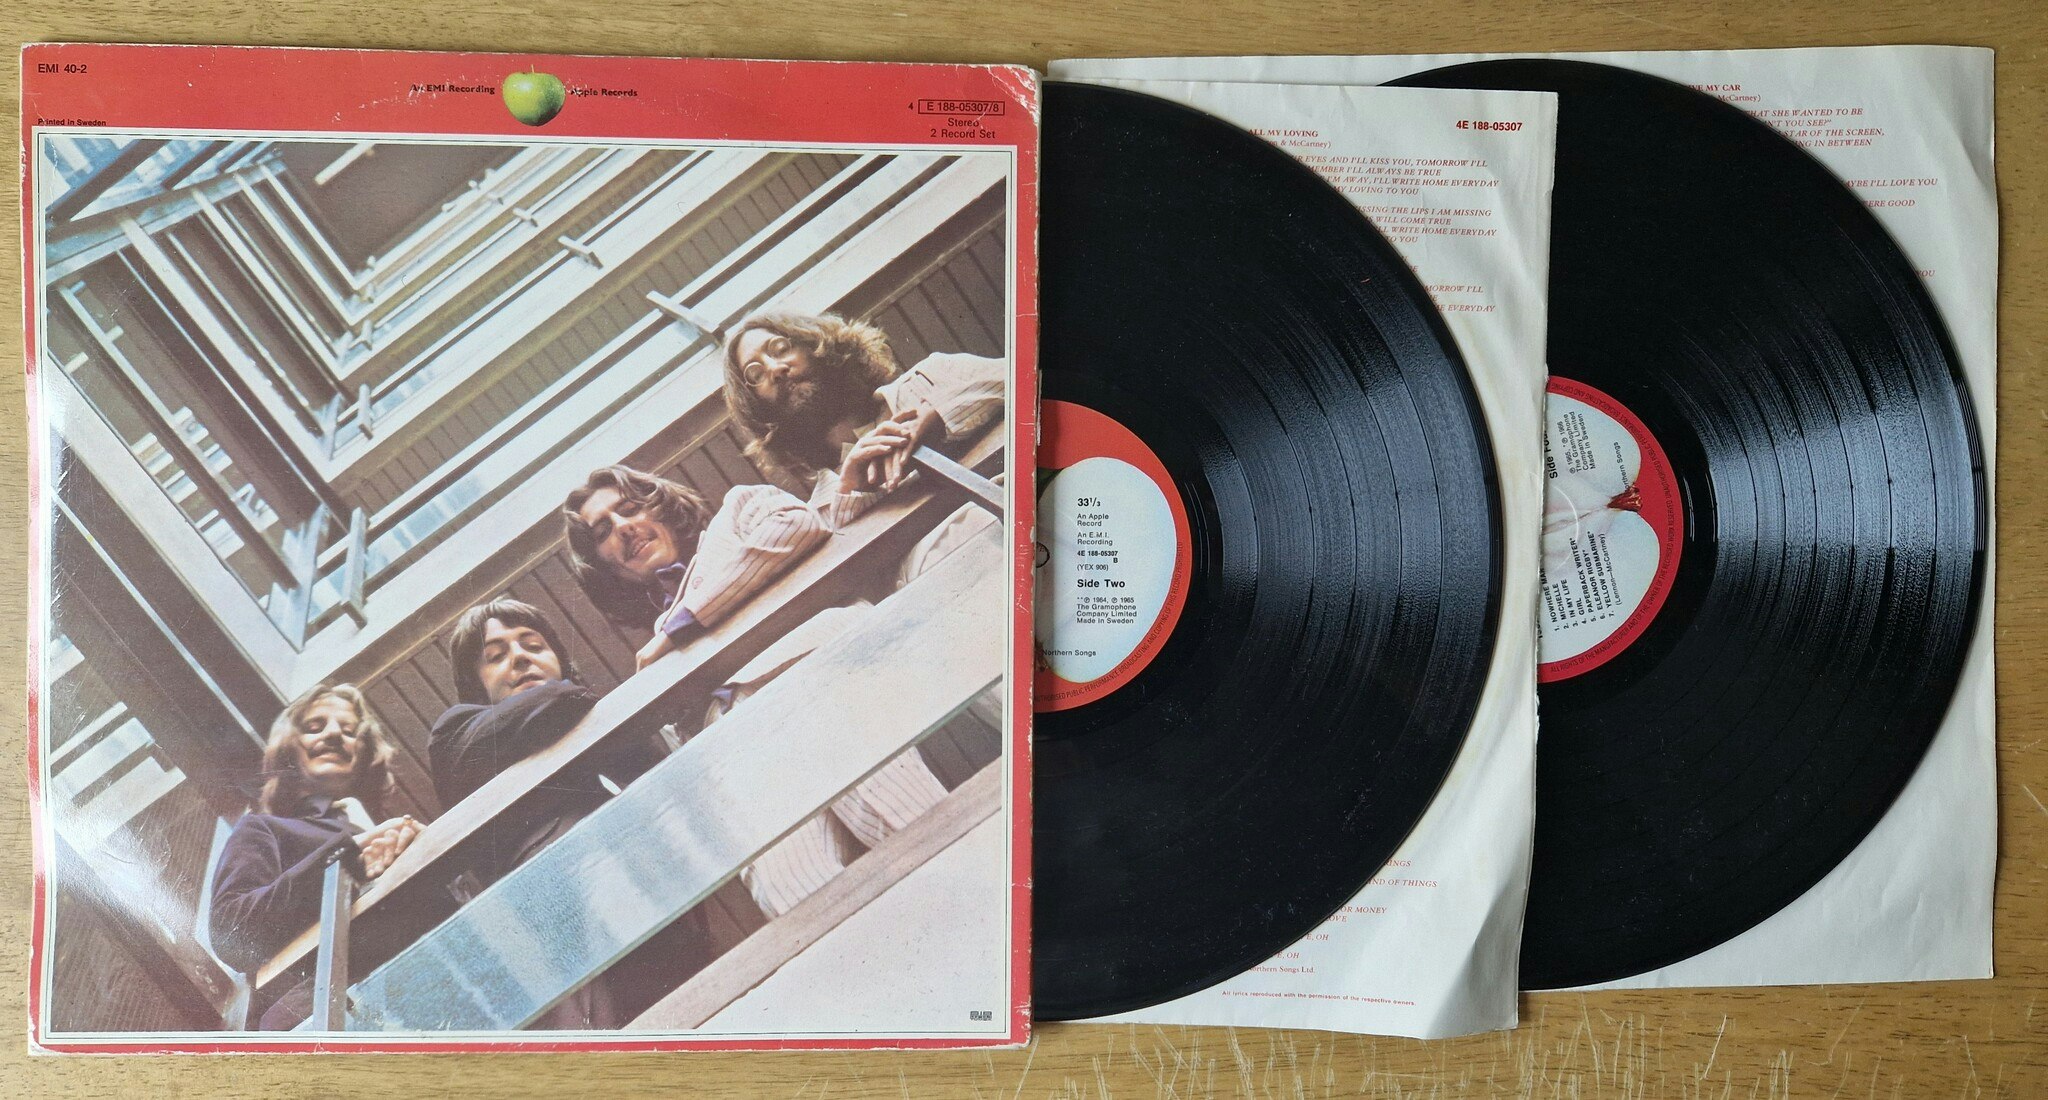 The Beatles, 1962-1966. Vinyl 2LP